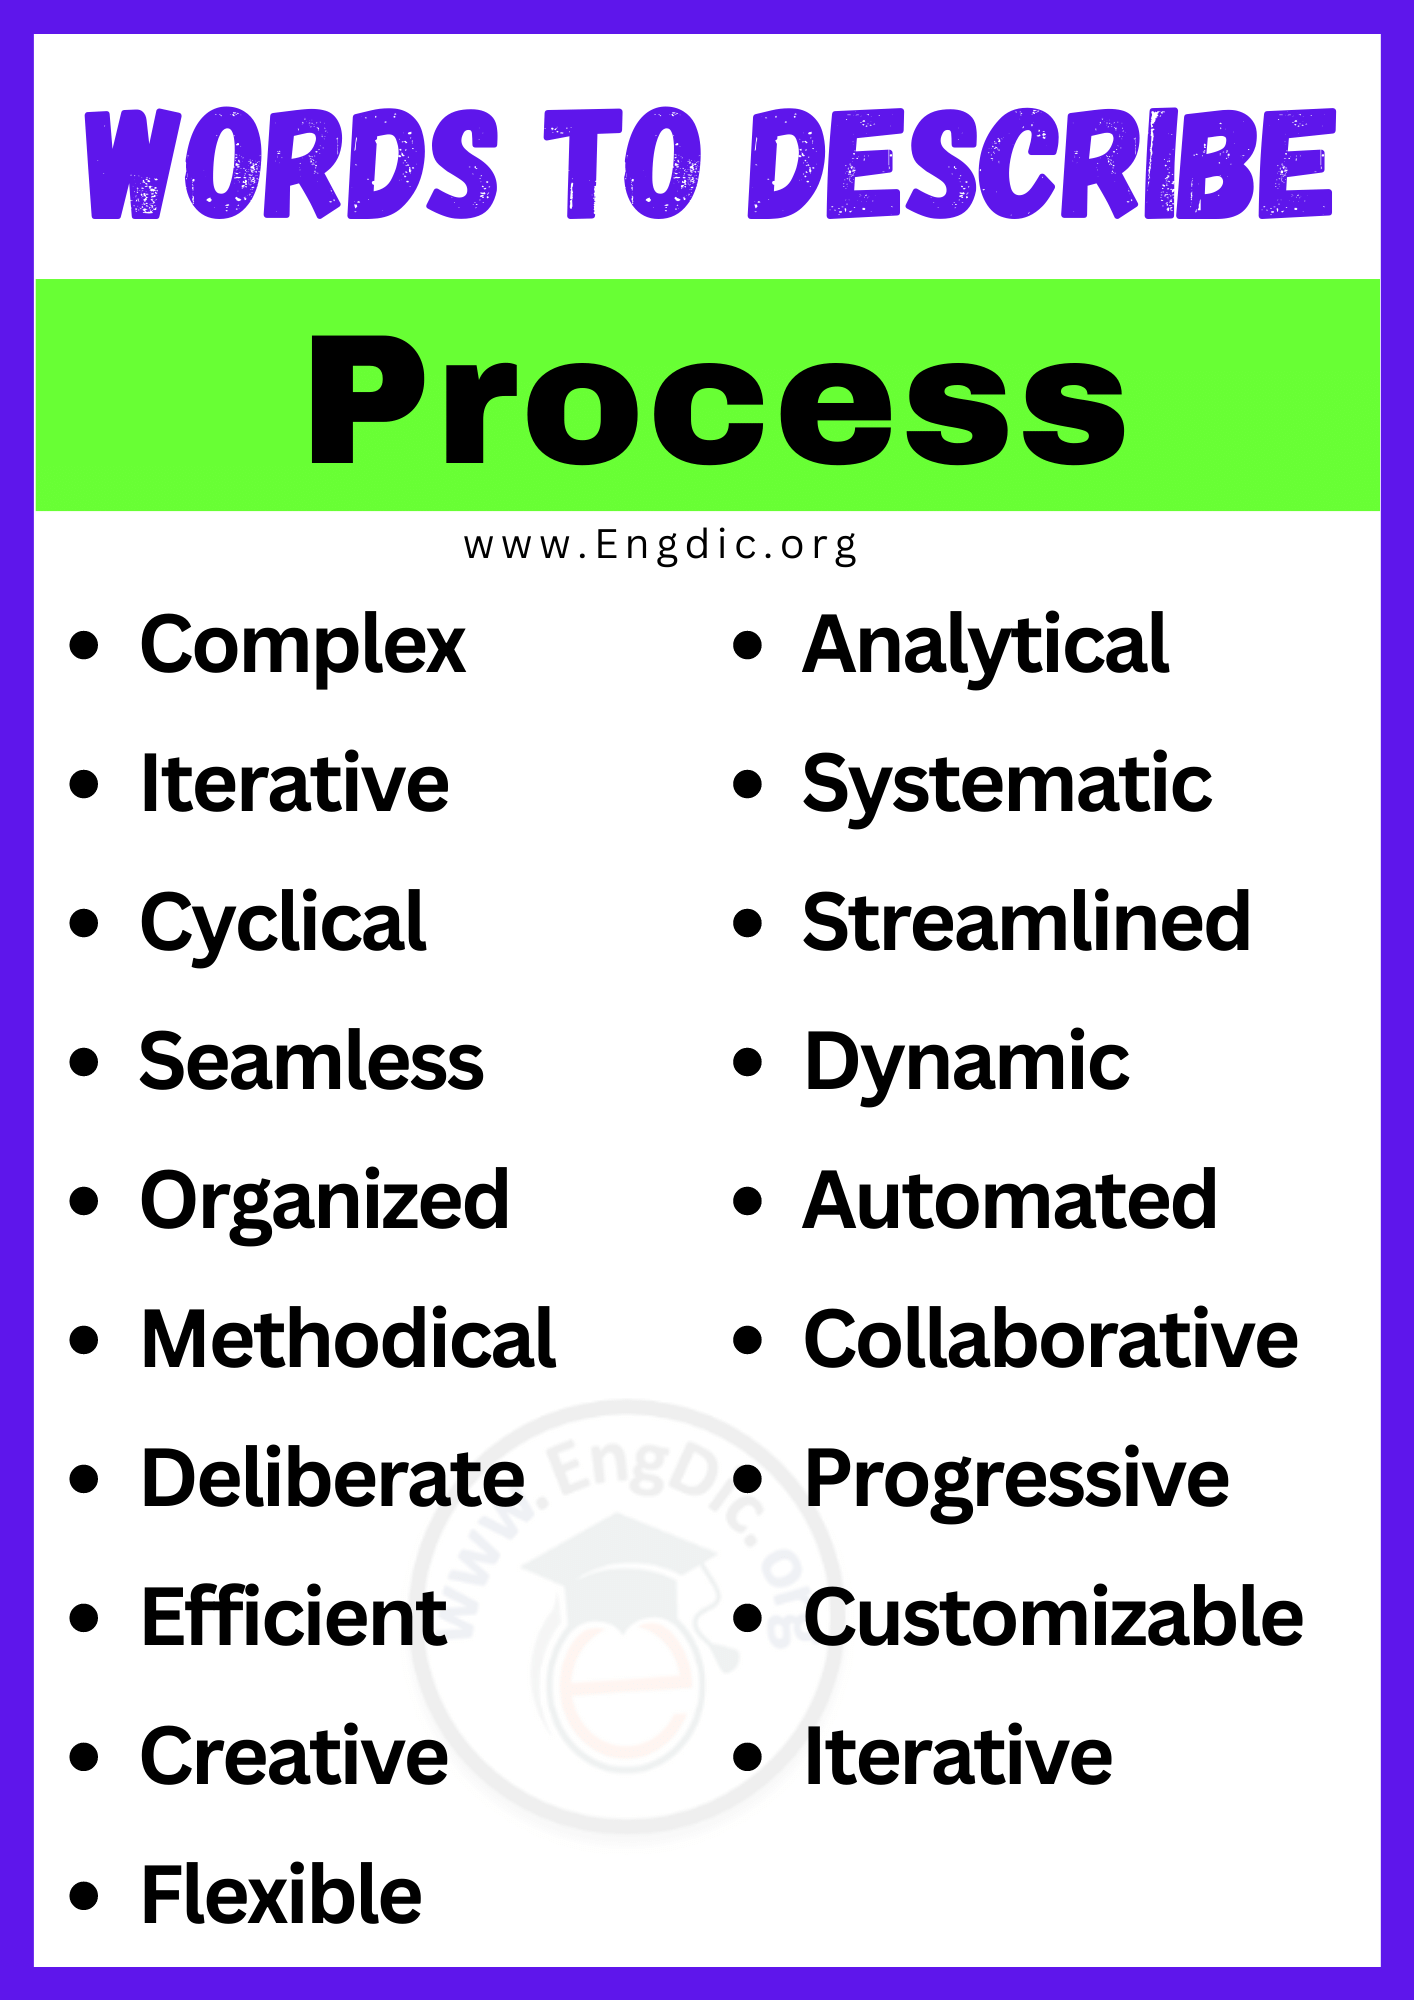 Words to Describe Process